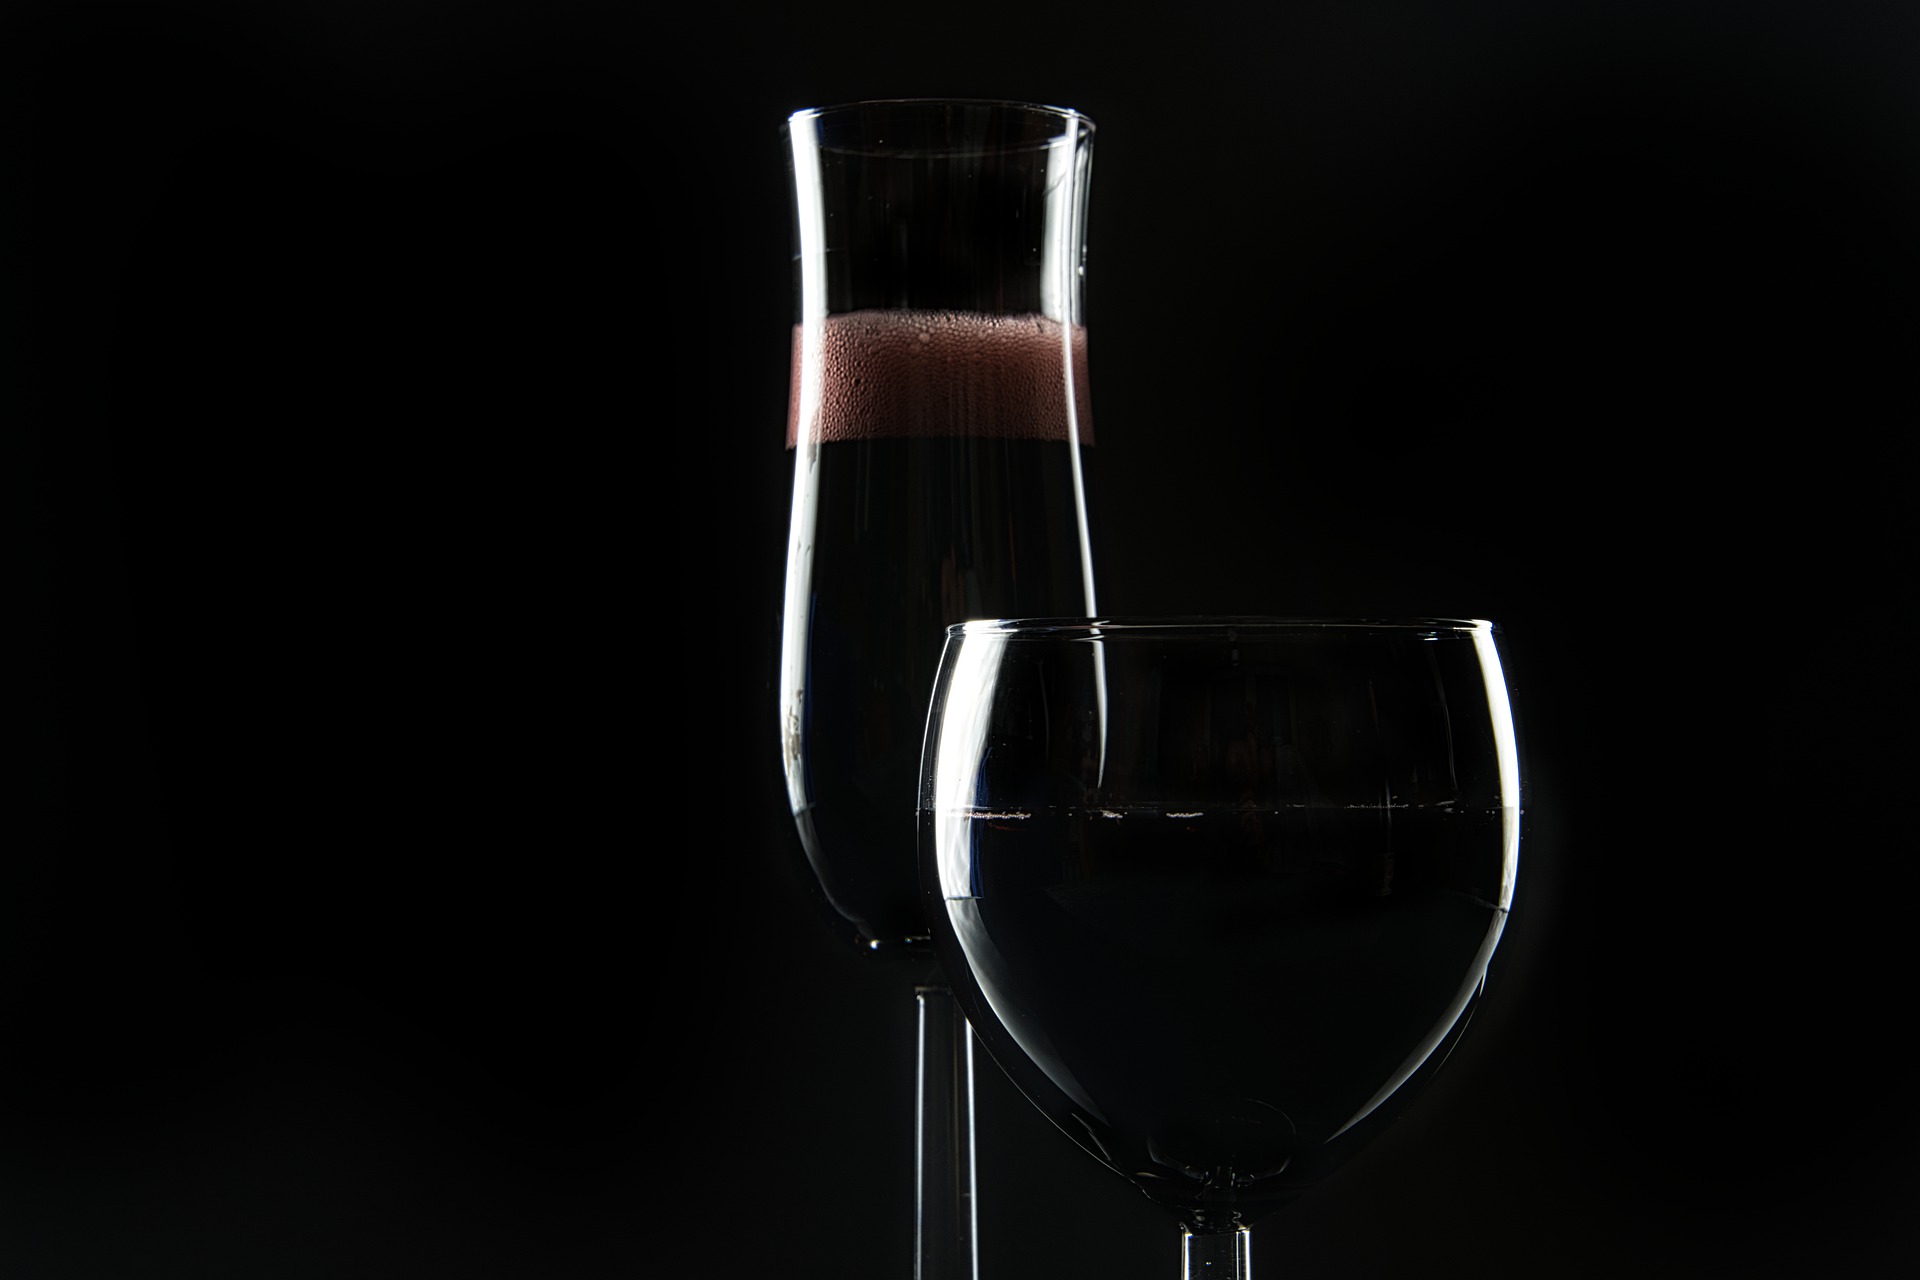 Two black cocktails against a black background